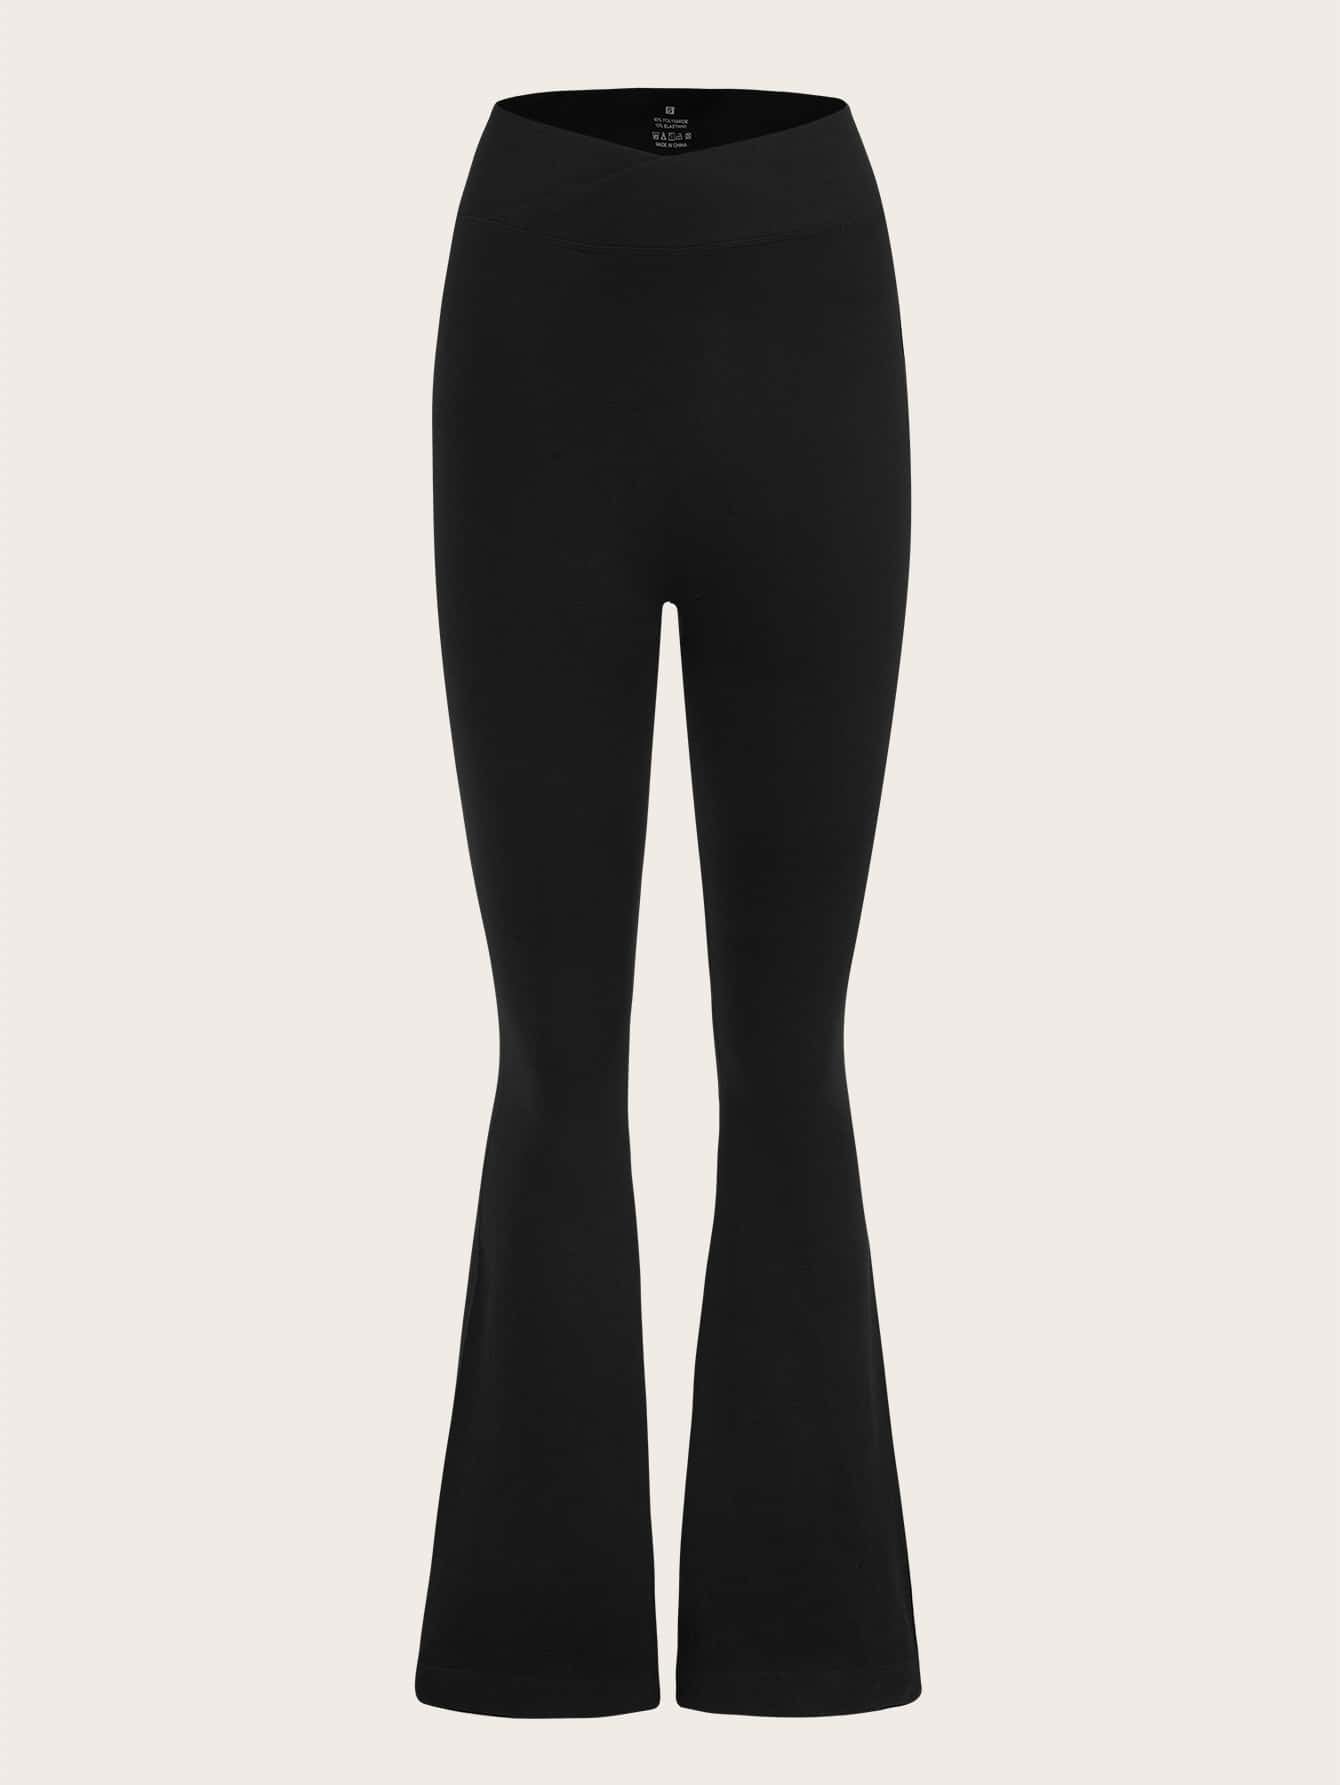 sexy workout pants for women – NextthinkShop